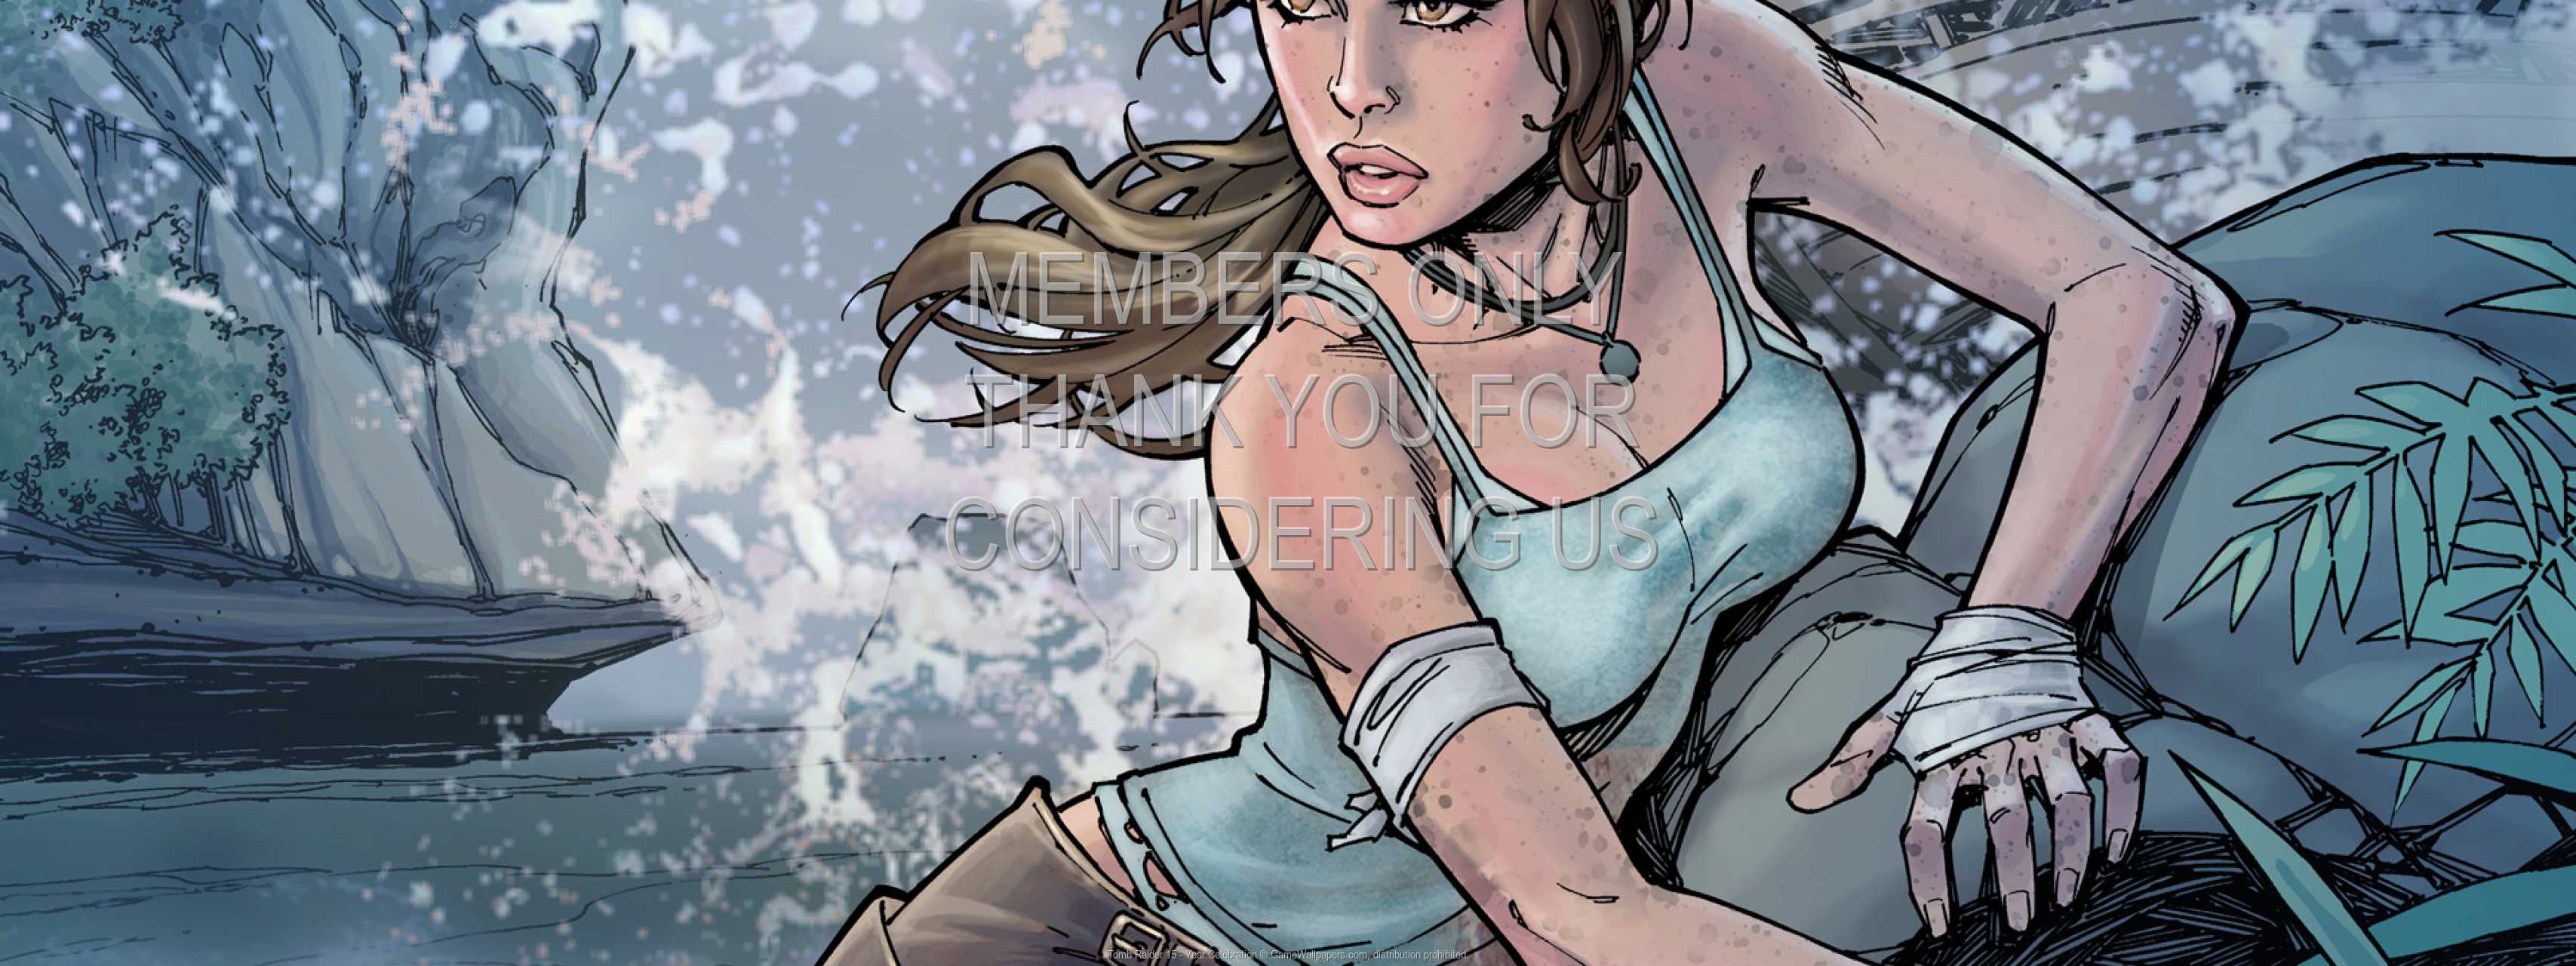 Tomb Raider 15 - Year Celebration 720p Horizontal Mobile fond d'cran 02